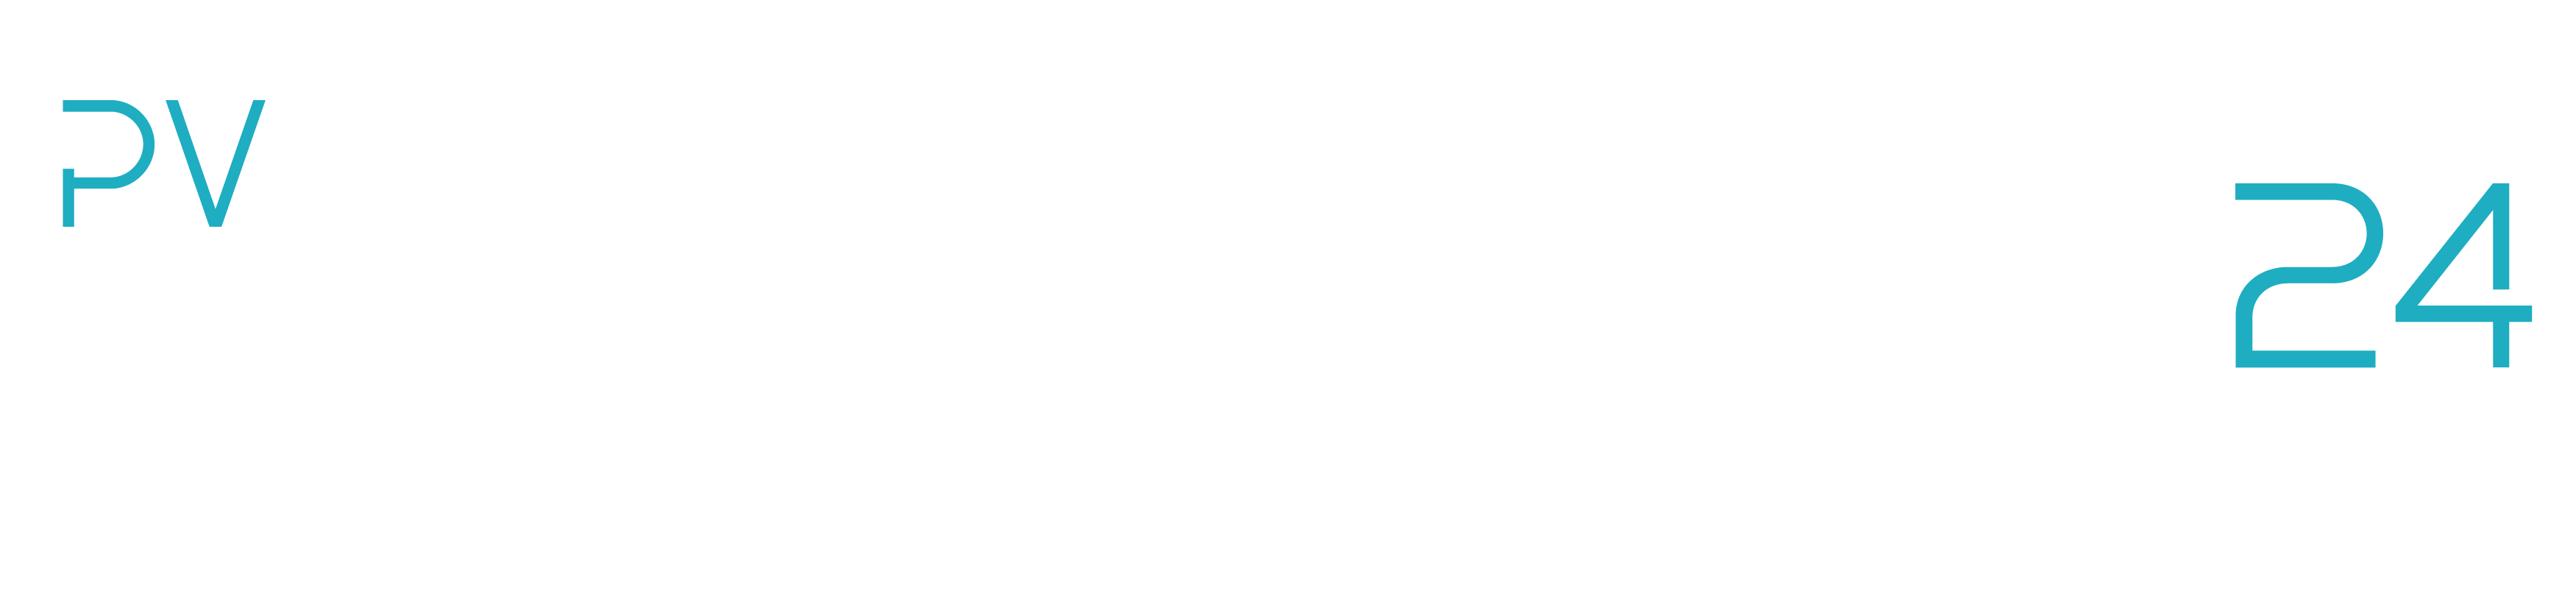 PV-Energy 24 Logo